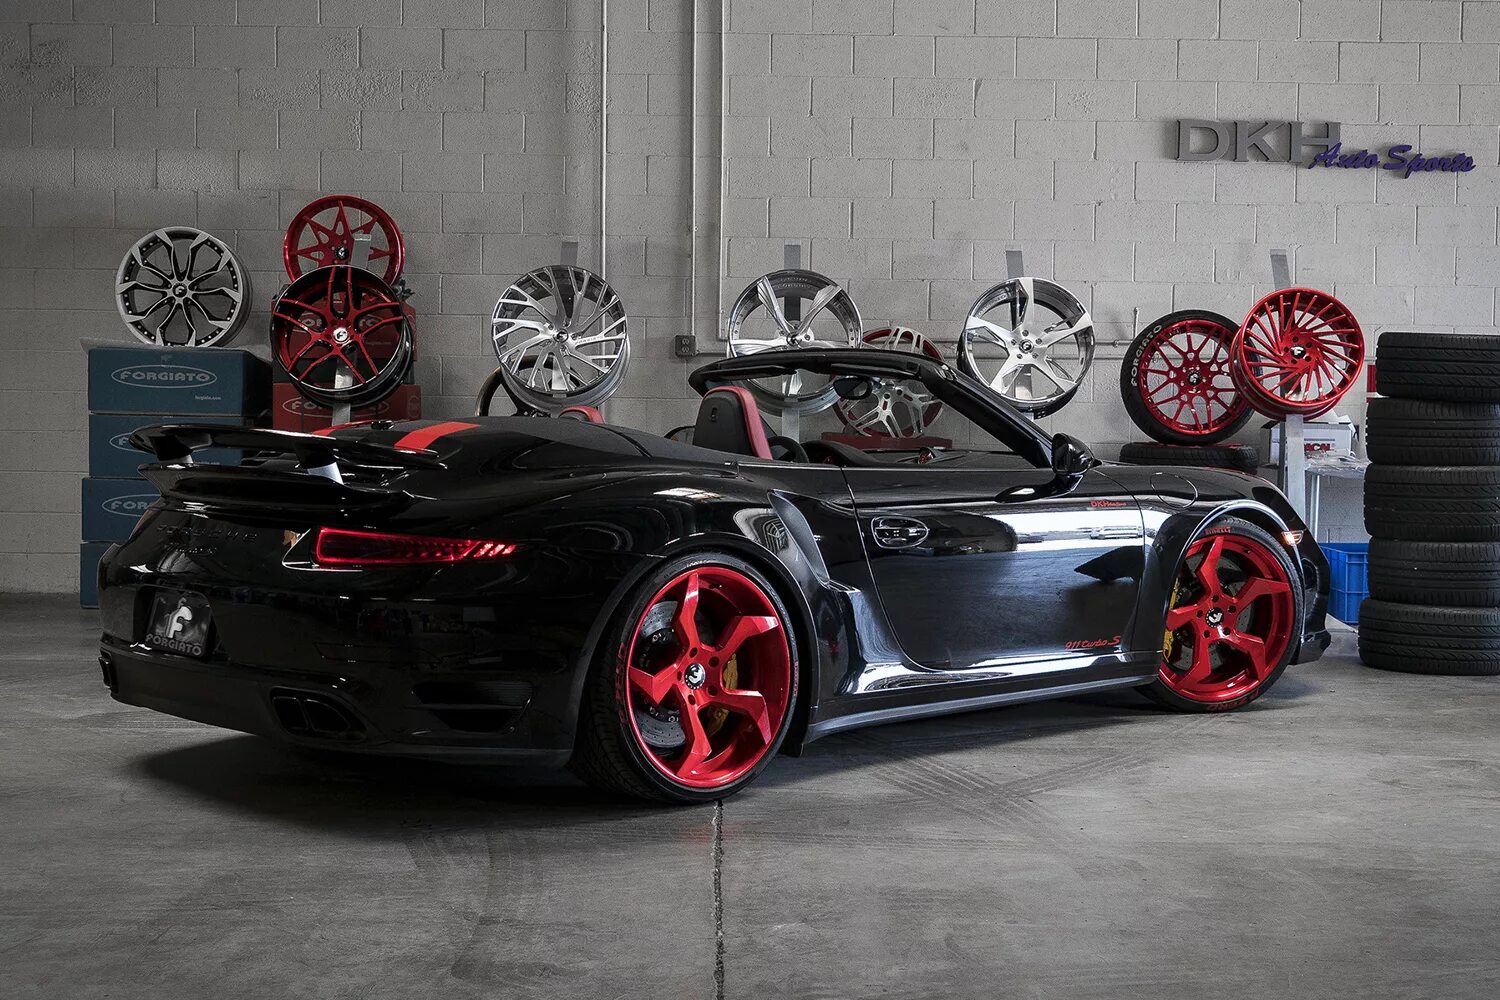 Тюнинг товары. Forgiato Wheels Porsche. Forgiato Wheels Lamborghini. Porsche 911 Turbo Red Candy. Диски Порше 911.